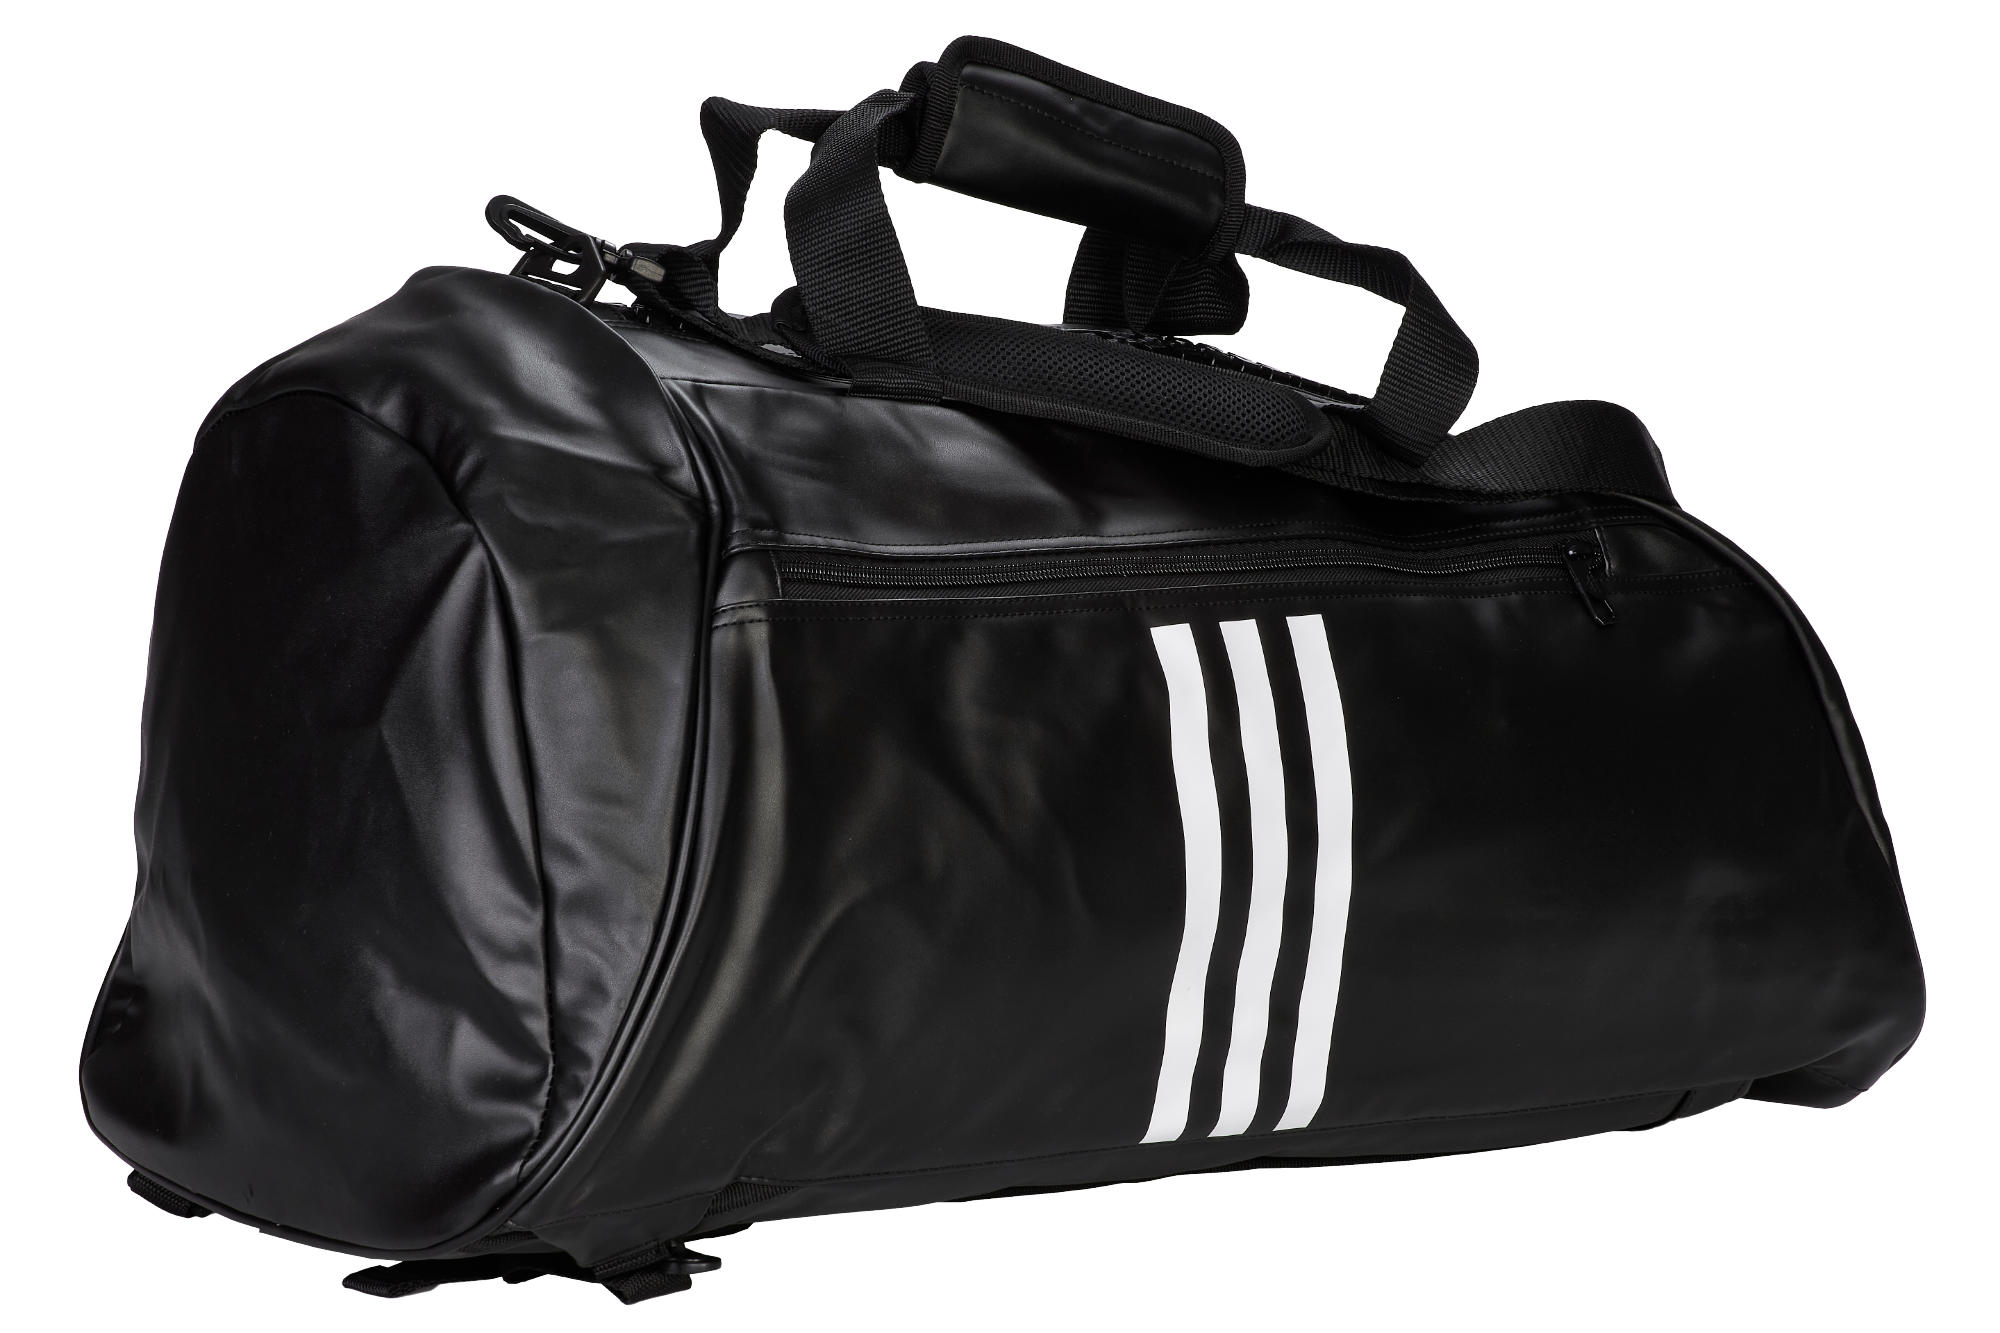 adidas 2in1 Bag "Boxing" black/white PU, adiACC051B